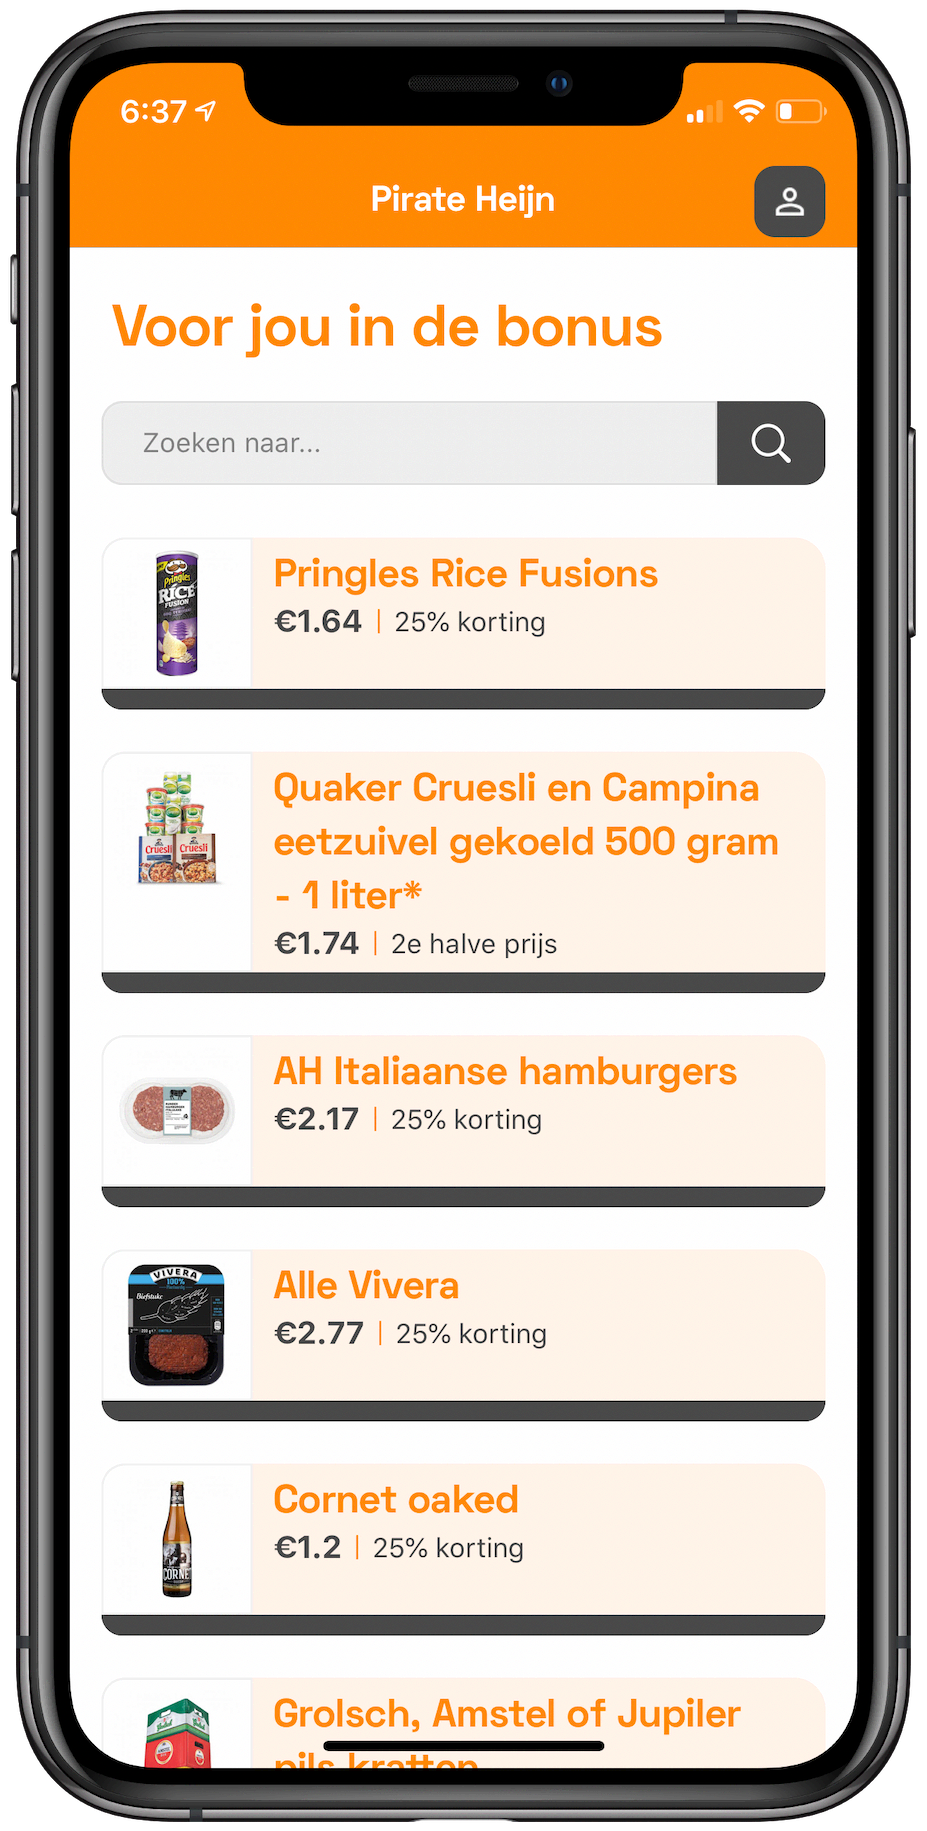 Pirate Heijn app interface